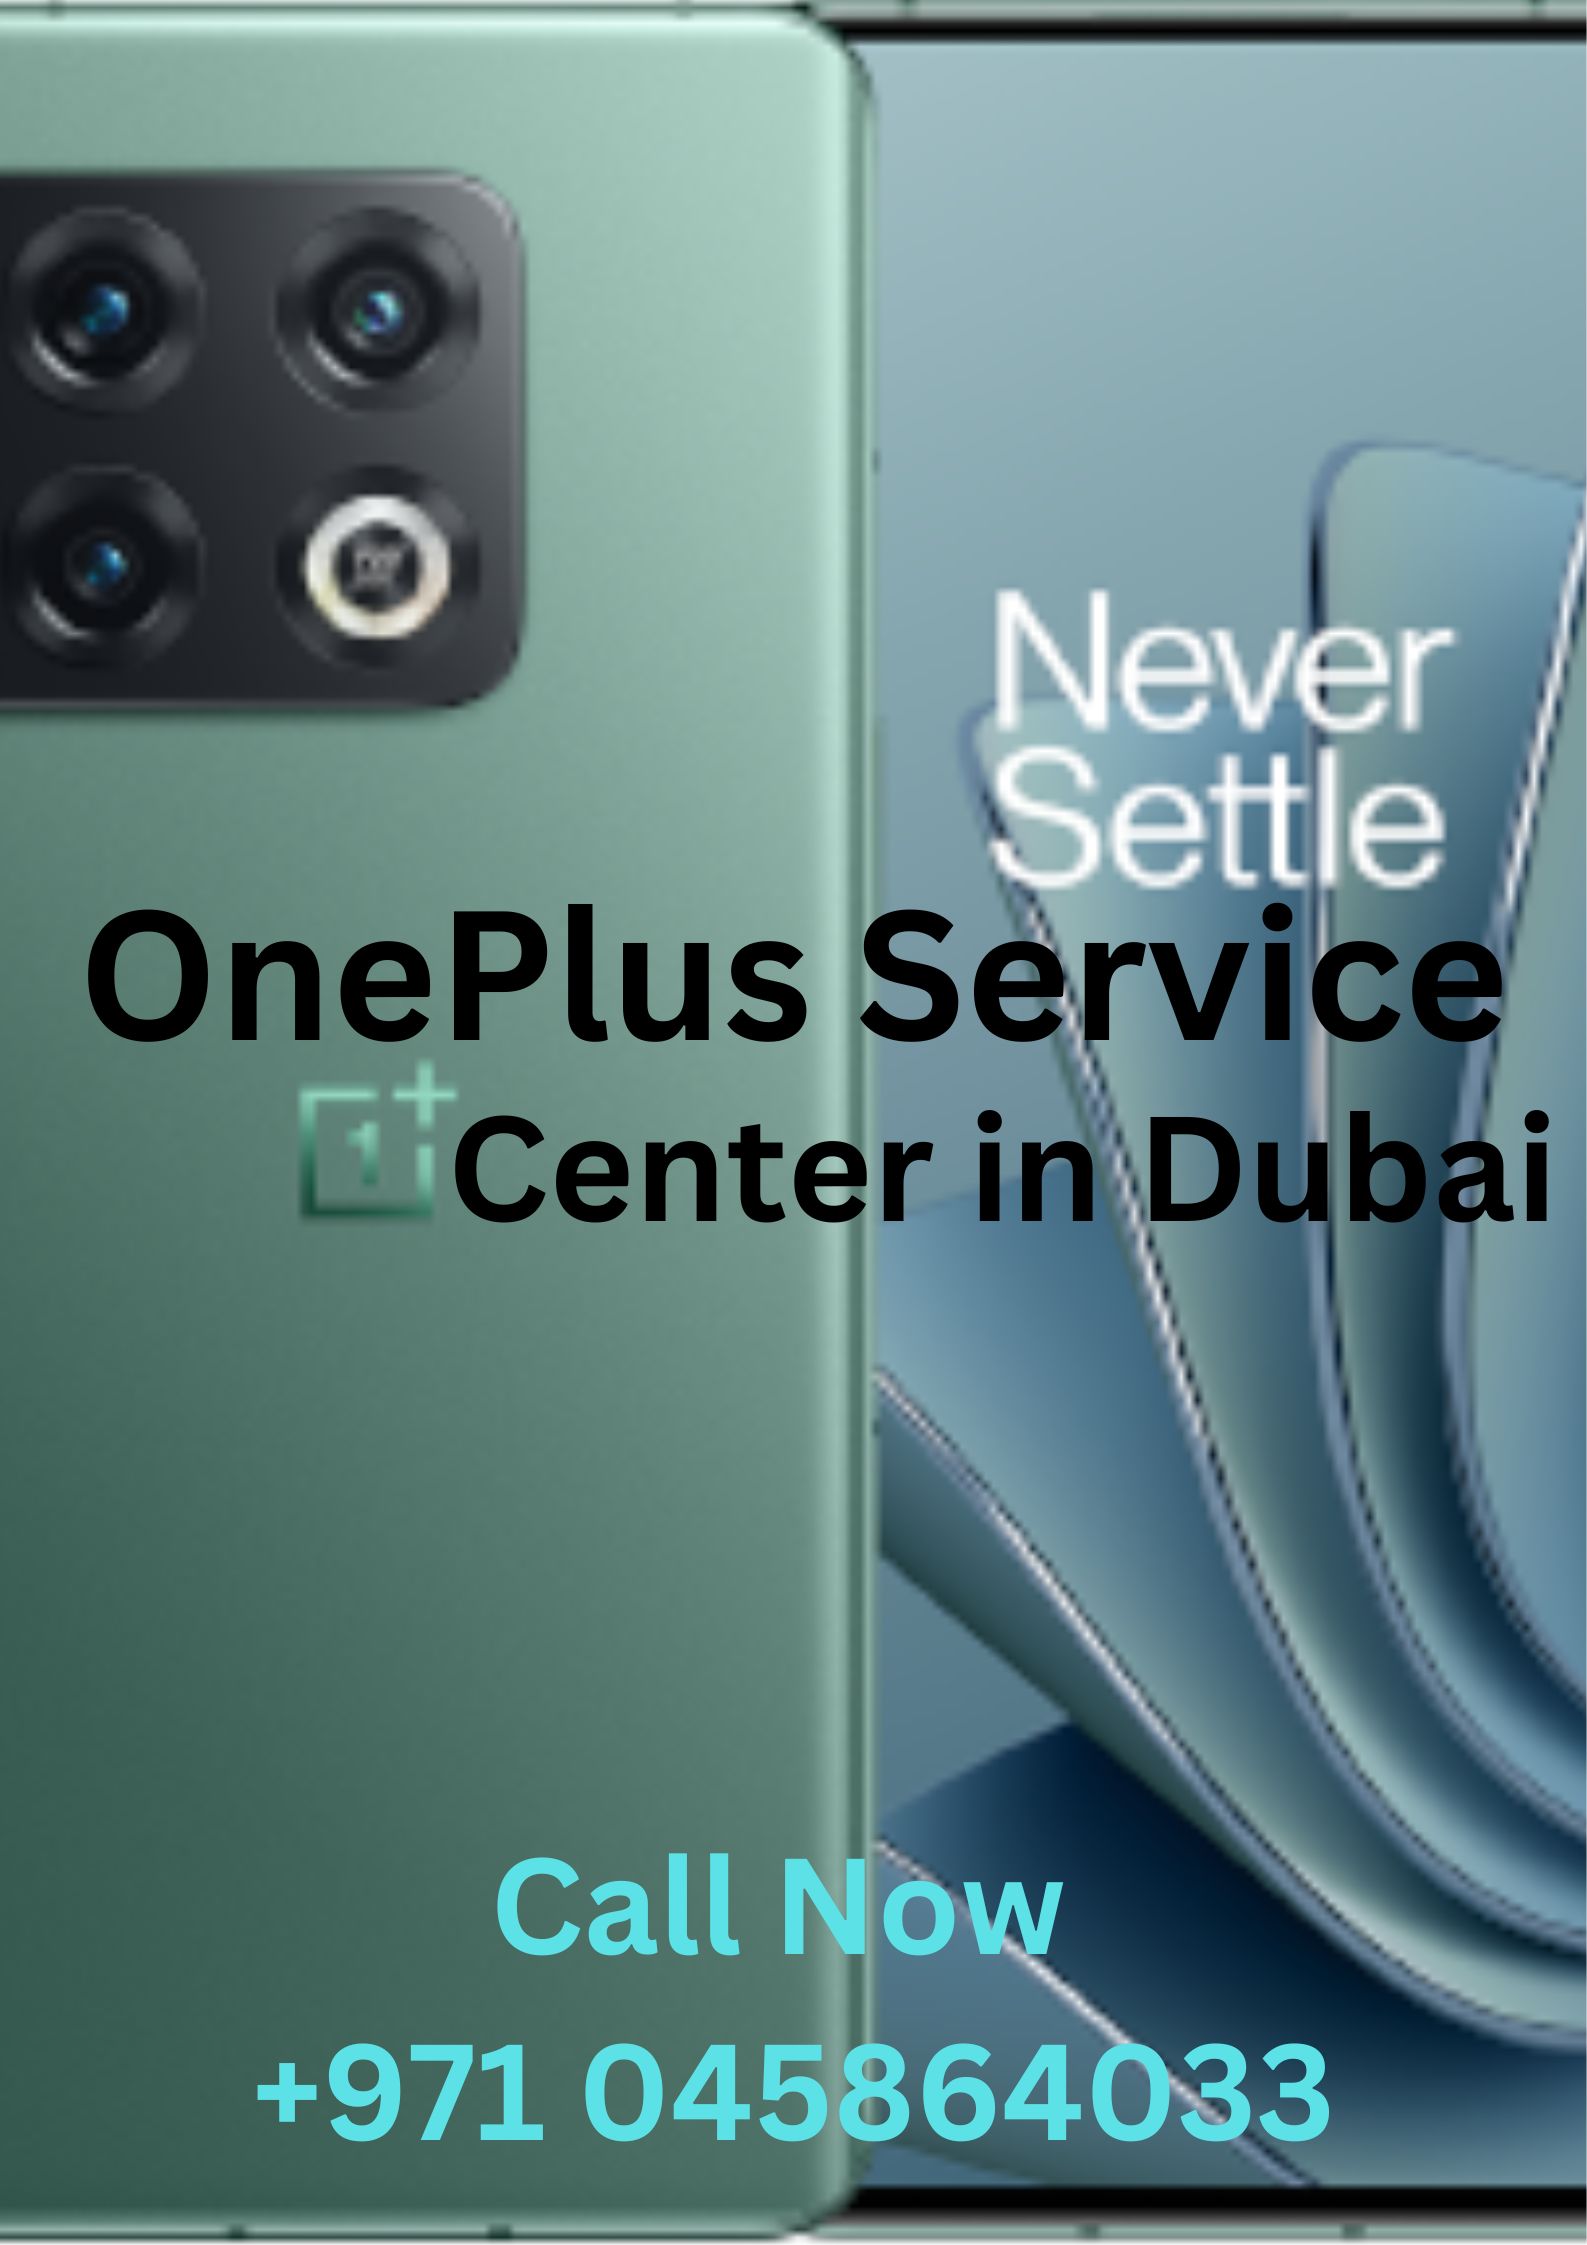 OnePlus Service Center in Dubai